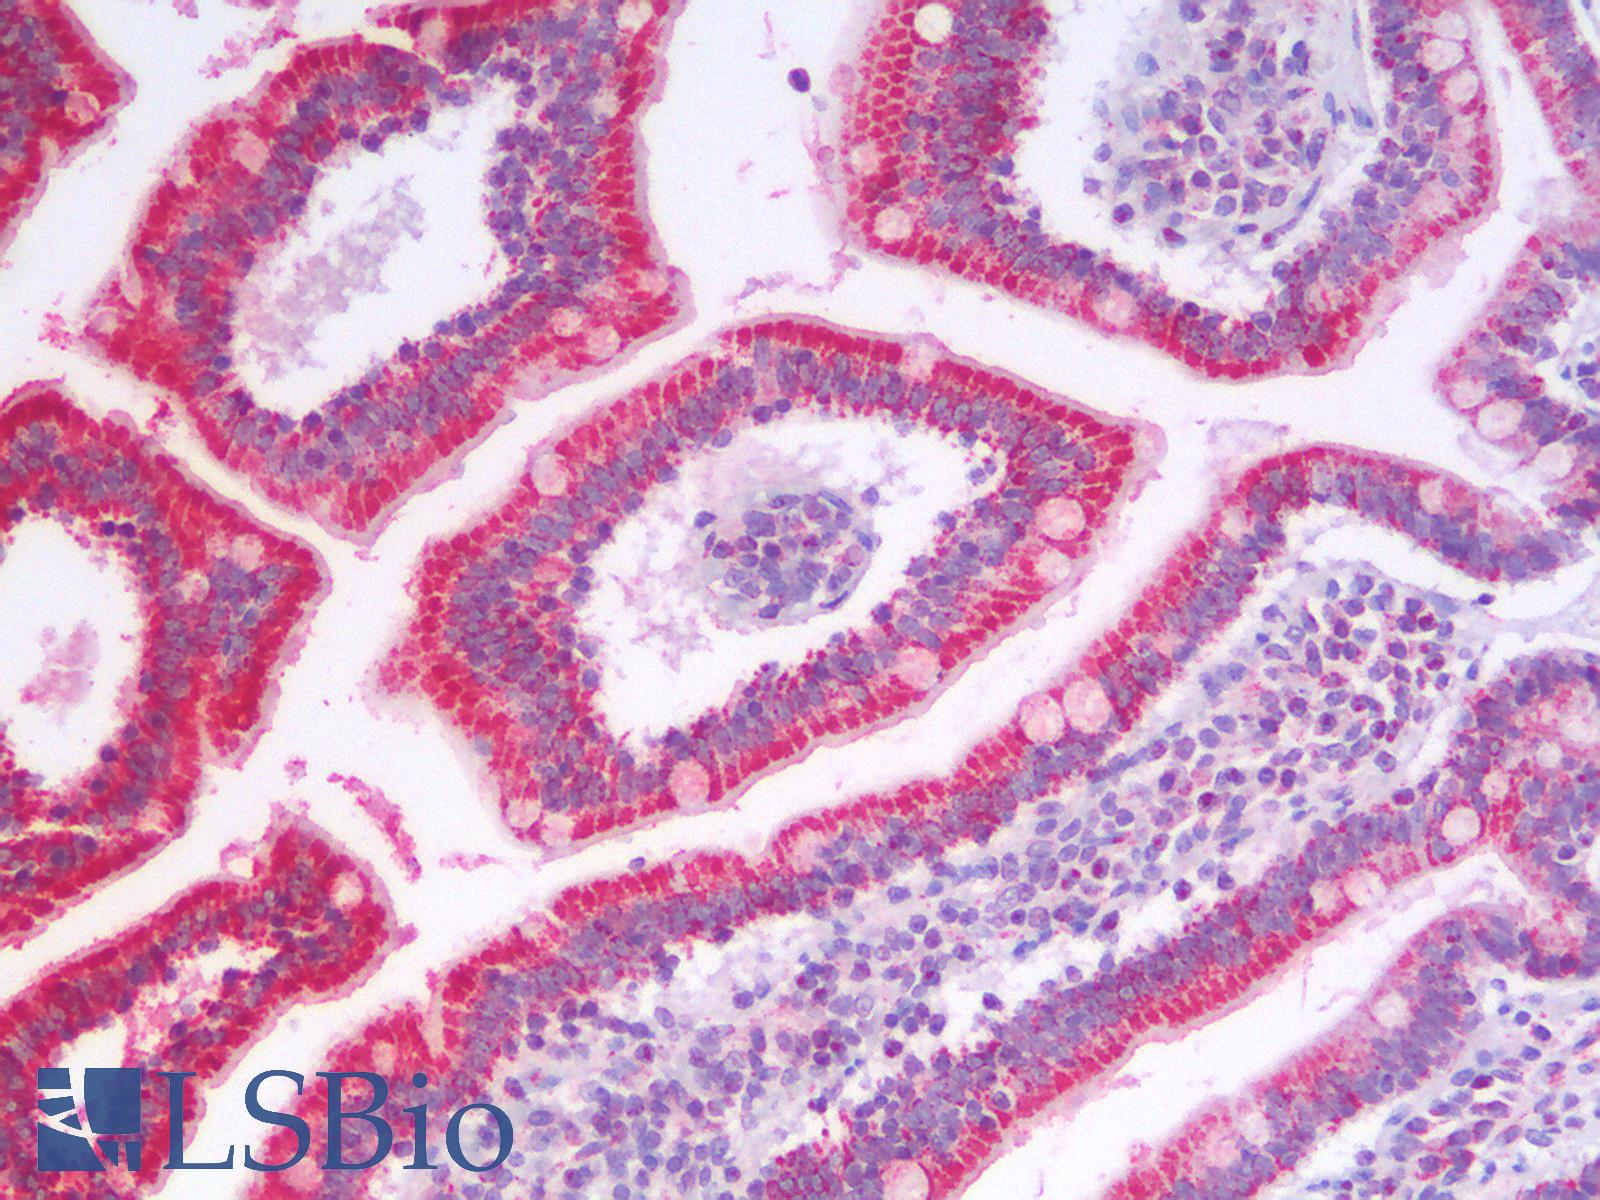 SDHA Antibody - Human Small Intestine: Formalin-Fixed, Paraffin-Embedded (FFPE)